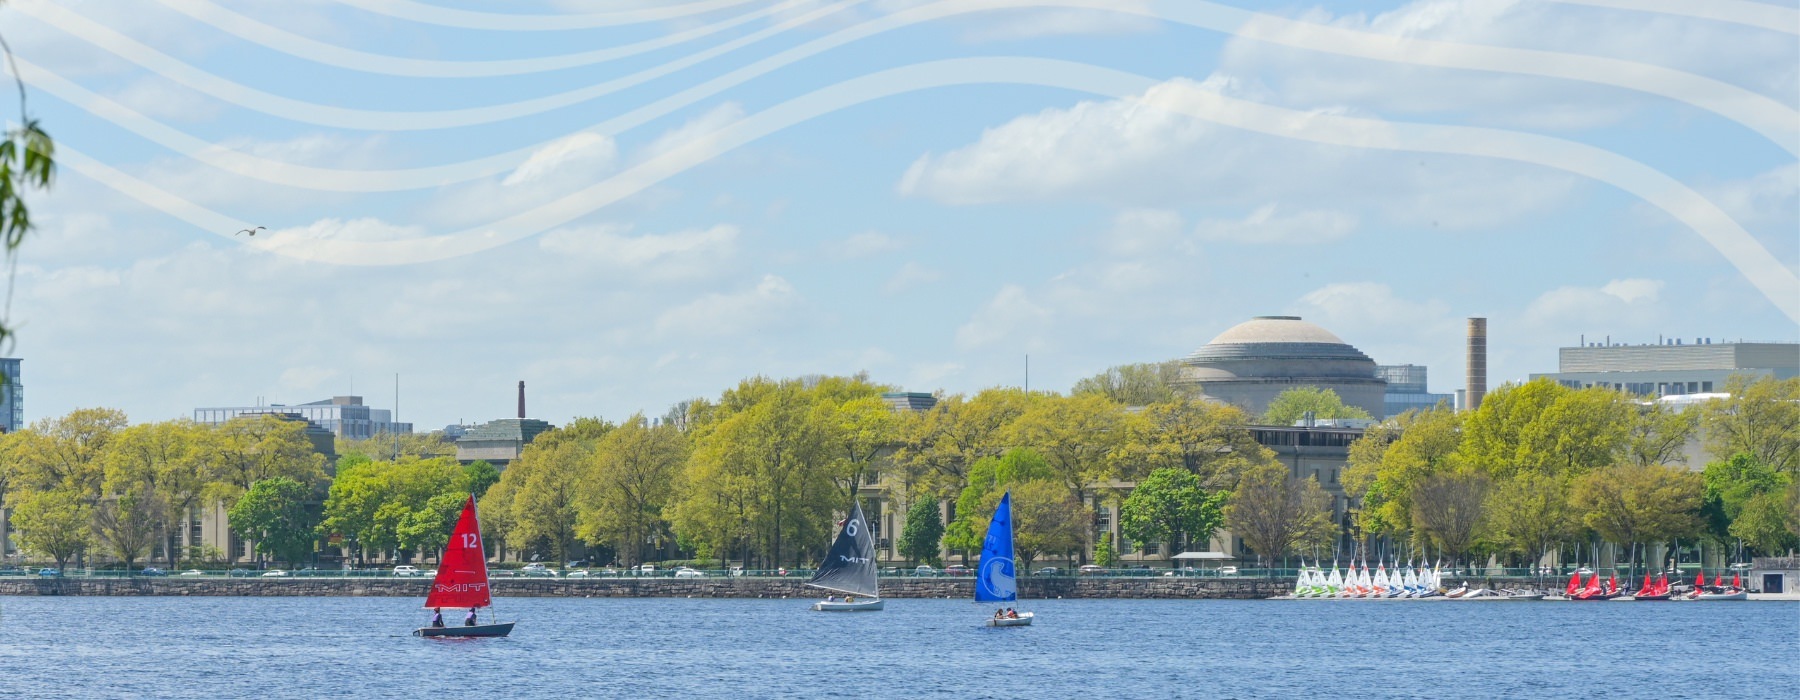 Views of sailboats on the Charles River 